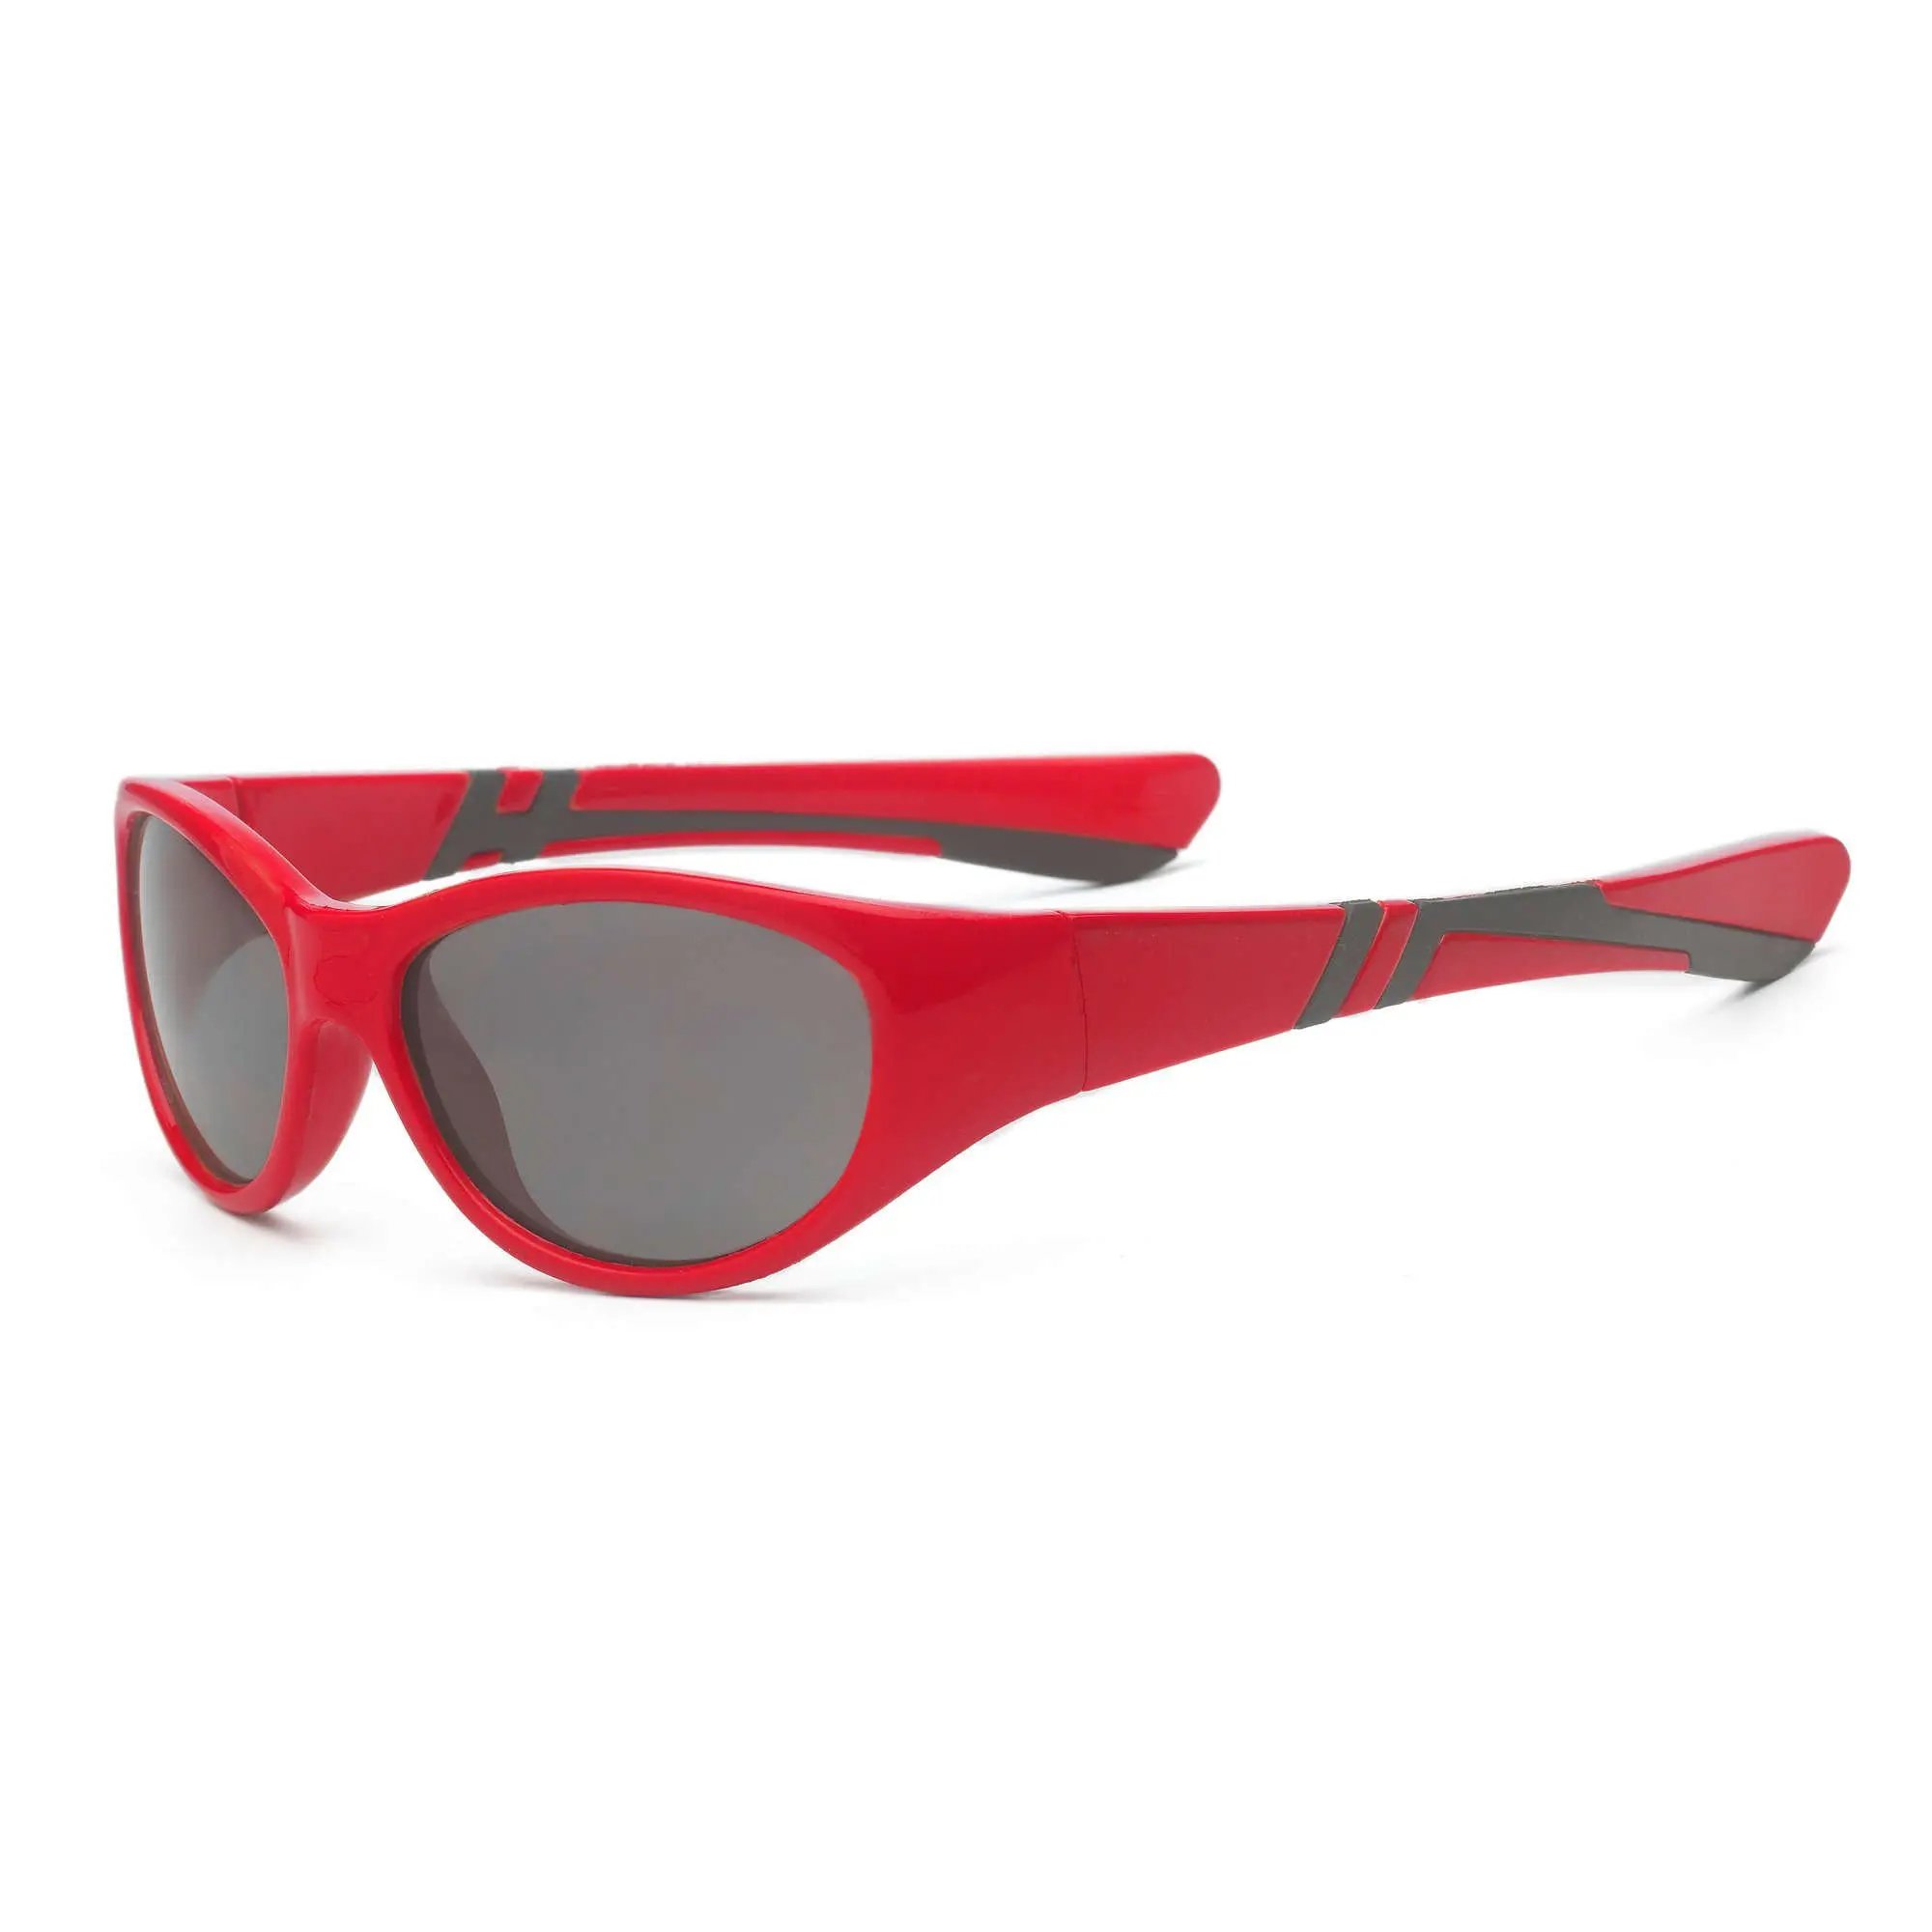 Discover Red/Black Sunglasses